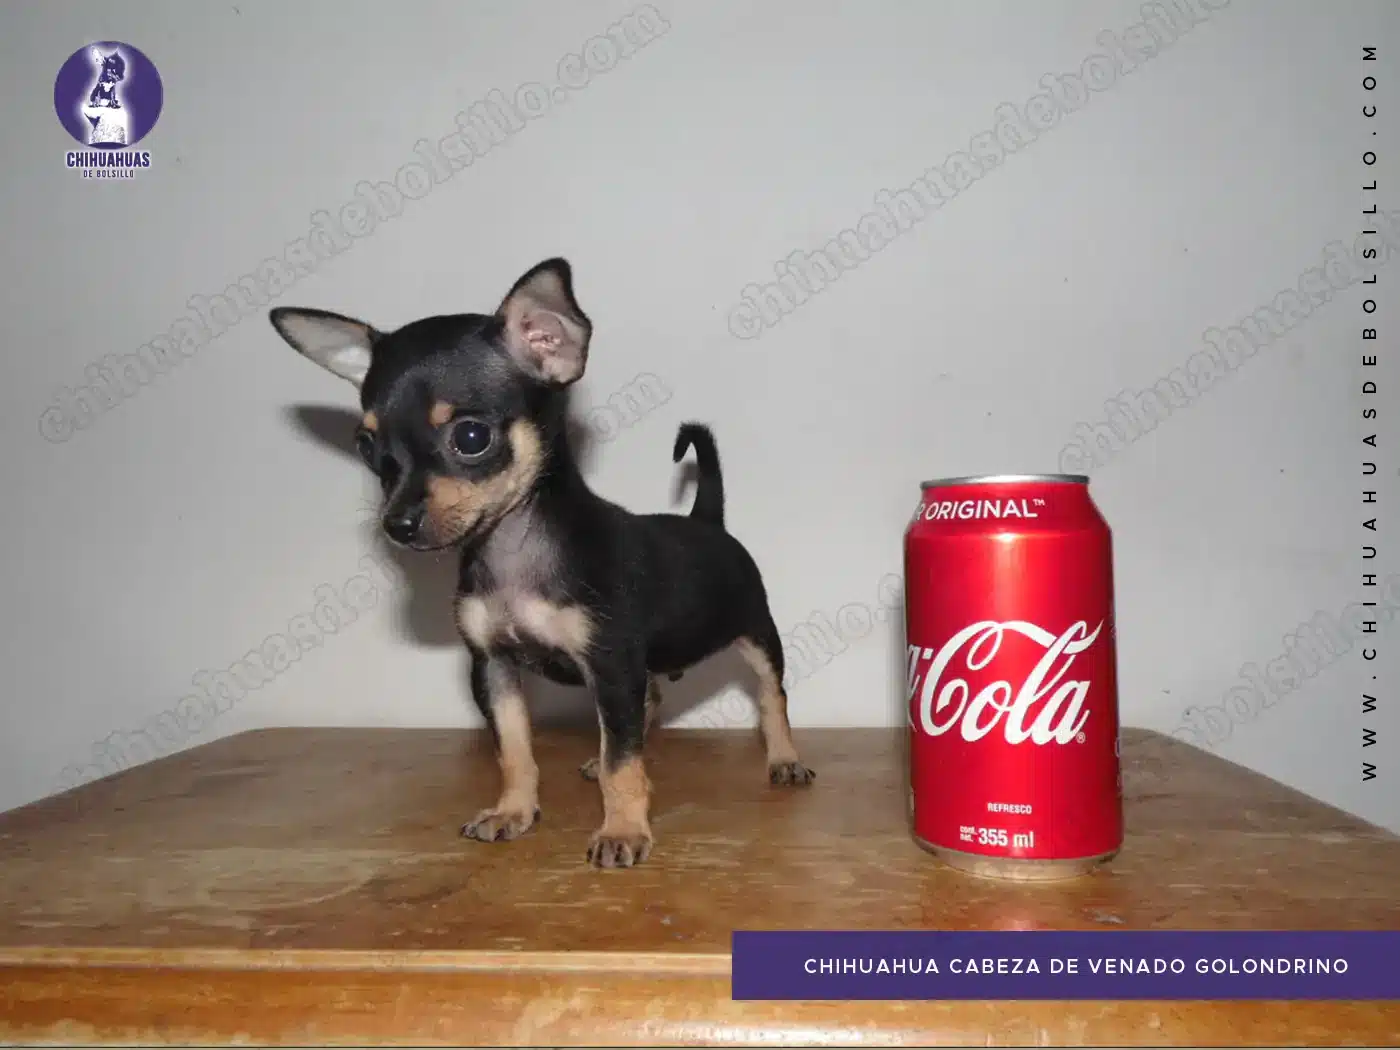 Chihuahua Cabeza de Venado Golondrino